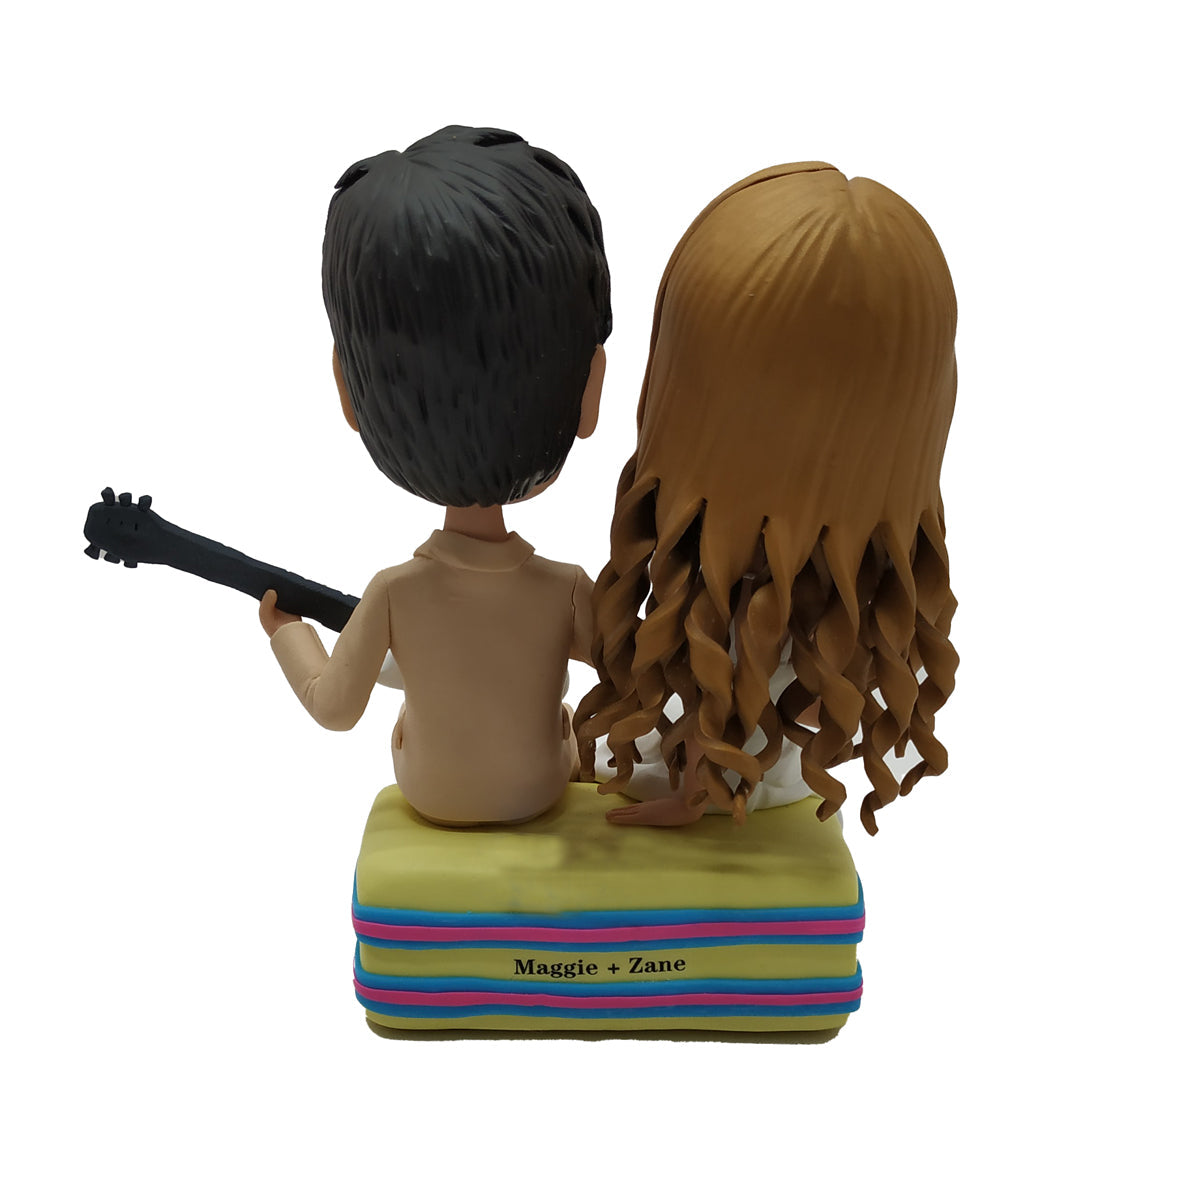 Couple Wedding Bobblehead Doll Playing Guitar